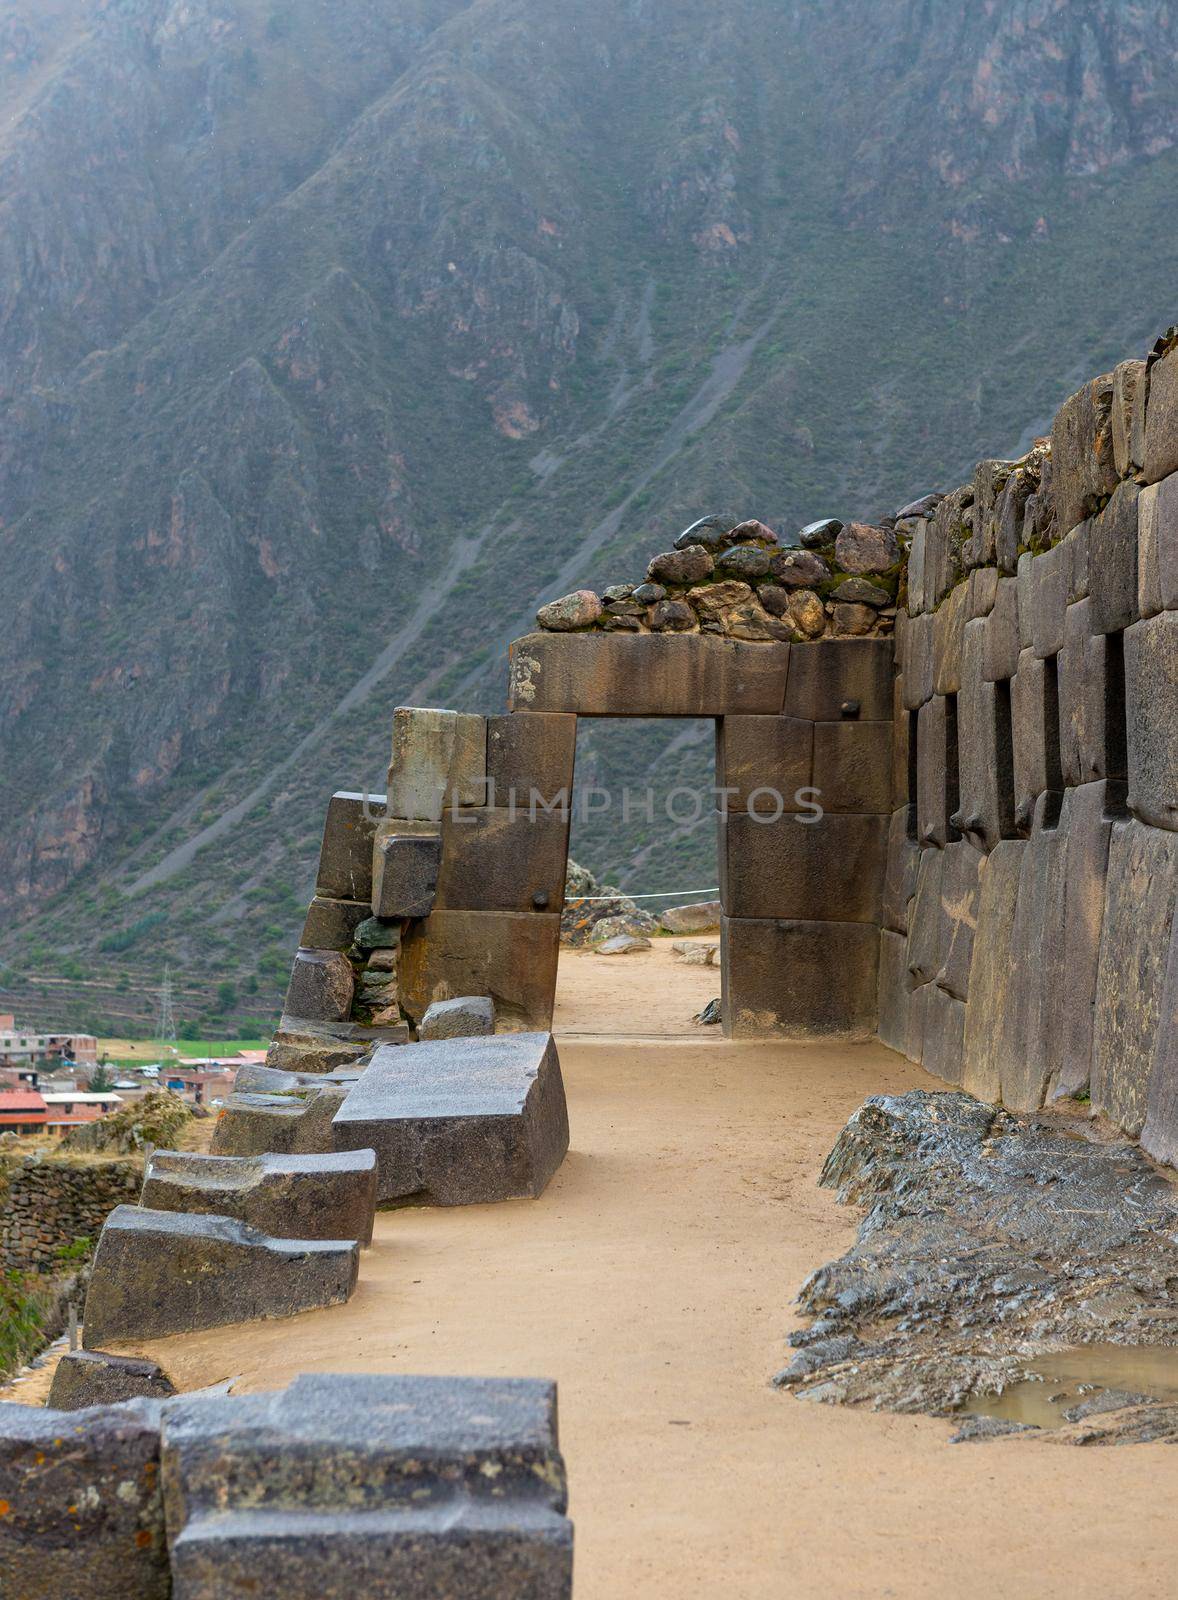 The massive stone passage of abandoned Inca fort in Ollantaytambo, Peru